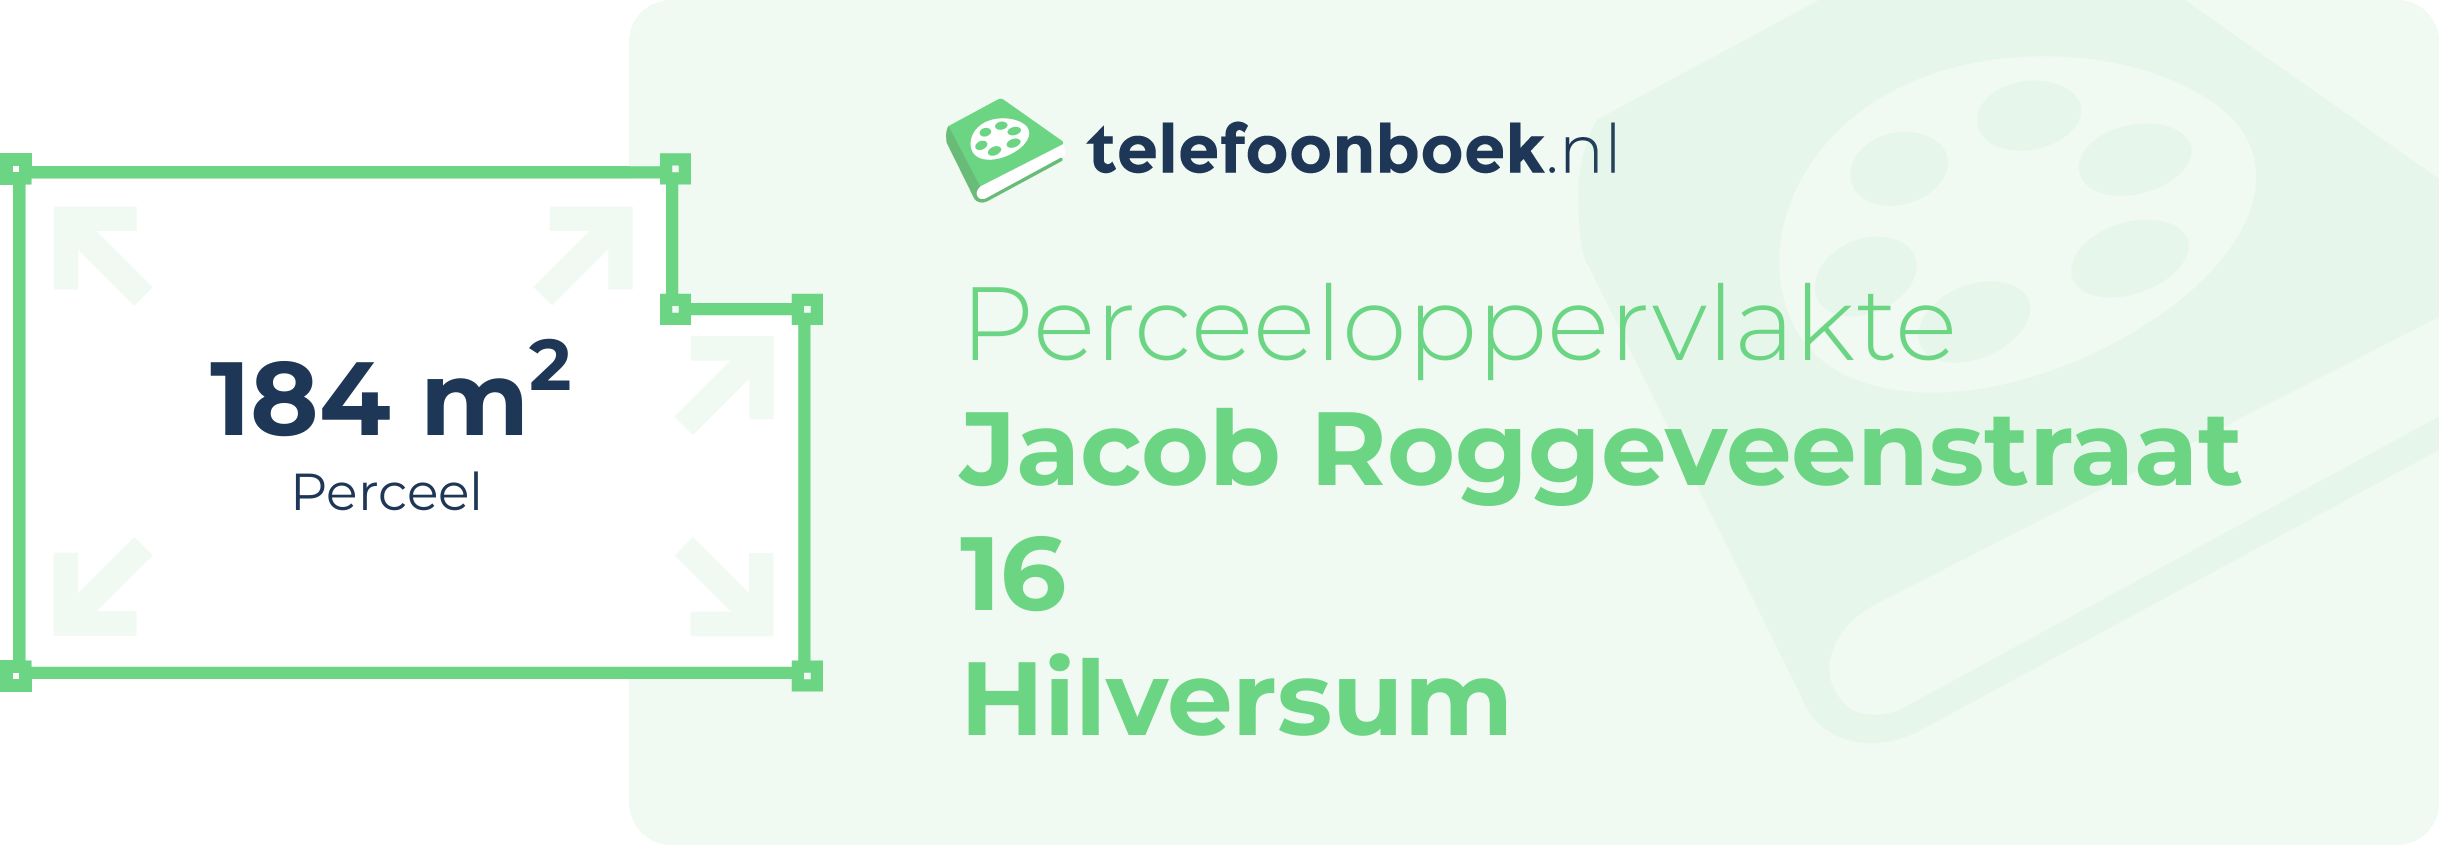 Perceeloppervlakte Jacob Roggeveenstraat 16 Hilversum